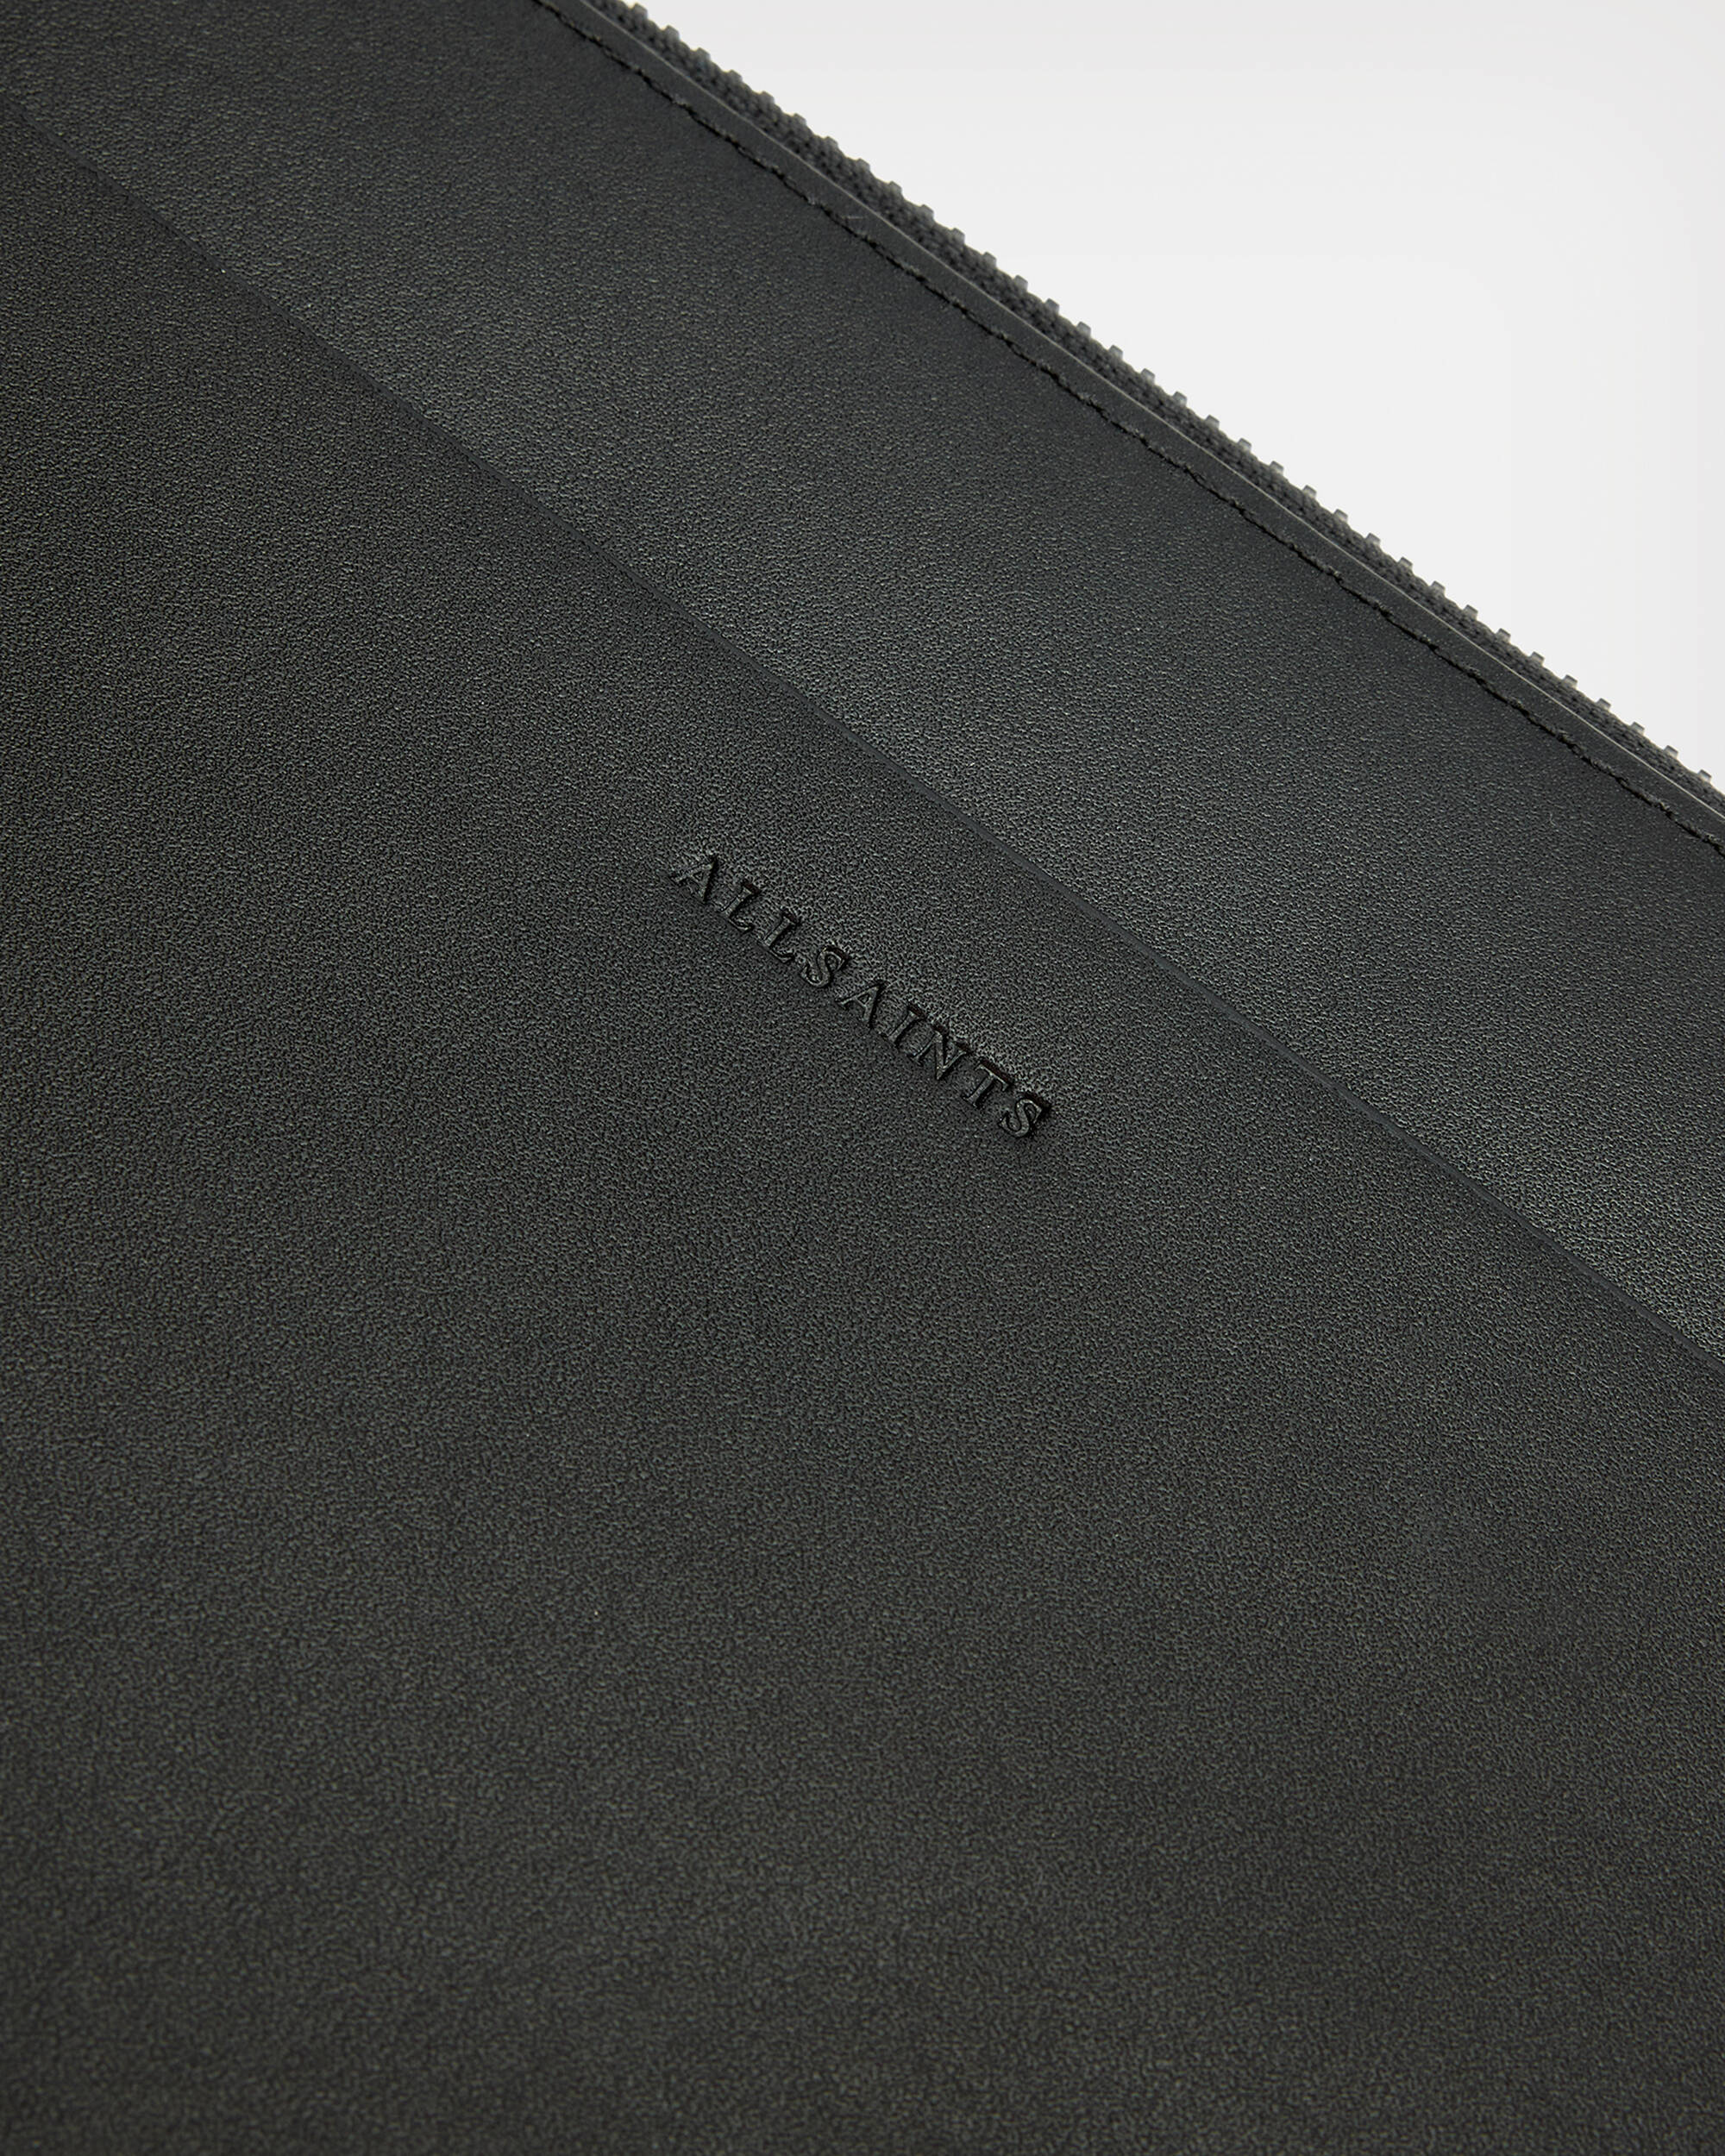 Gloster Leather Laptop Case Black | ALLSAINTS